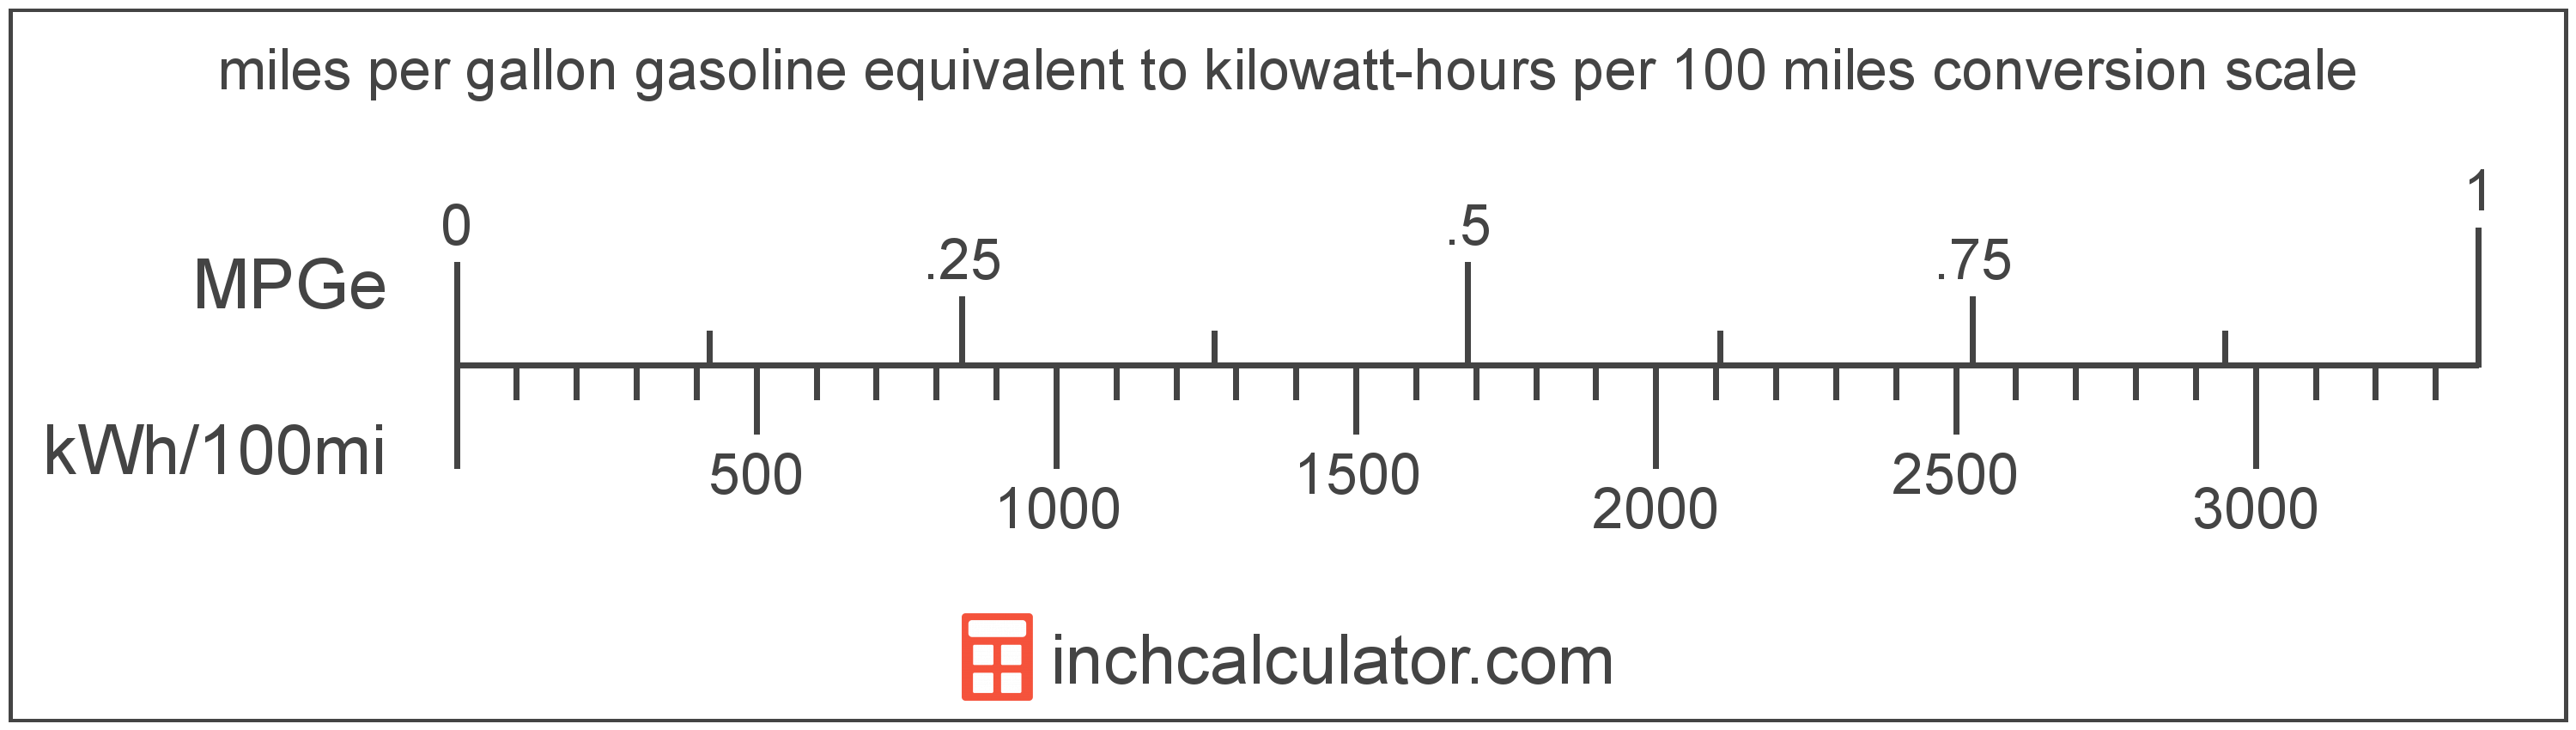 conversion scale showing miles per gallon gasoline equivalent and equivalent kilowatt-hours per 100 miles electric car efficiency values